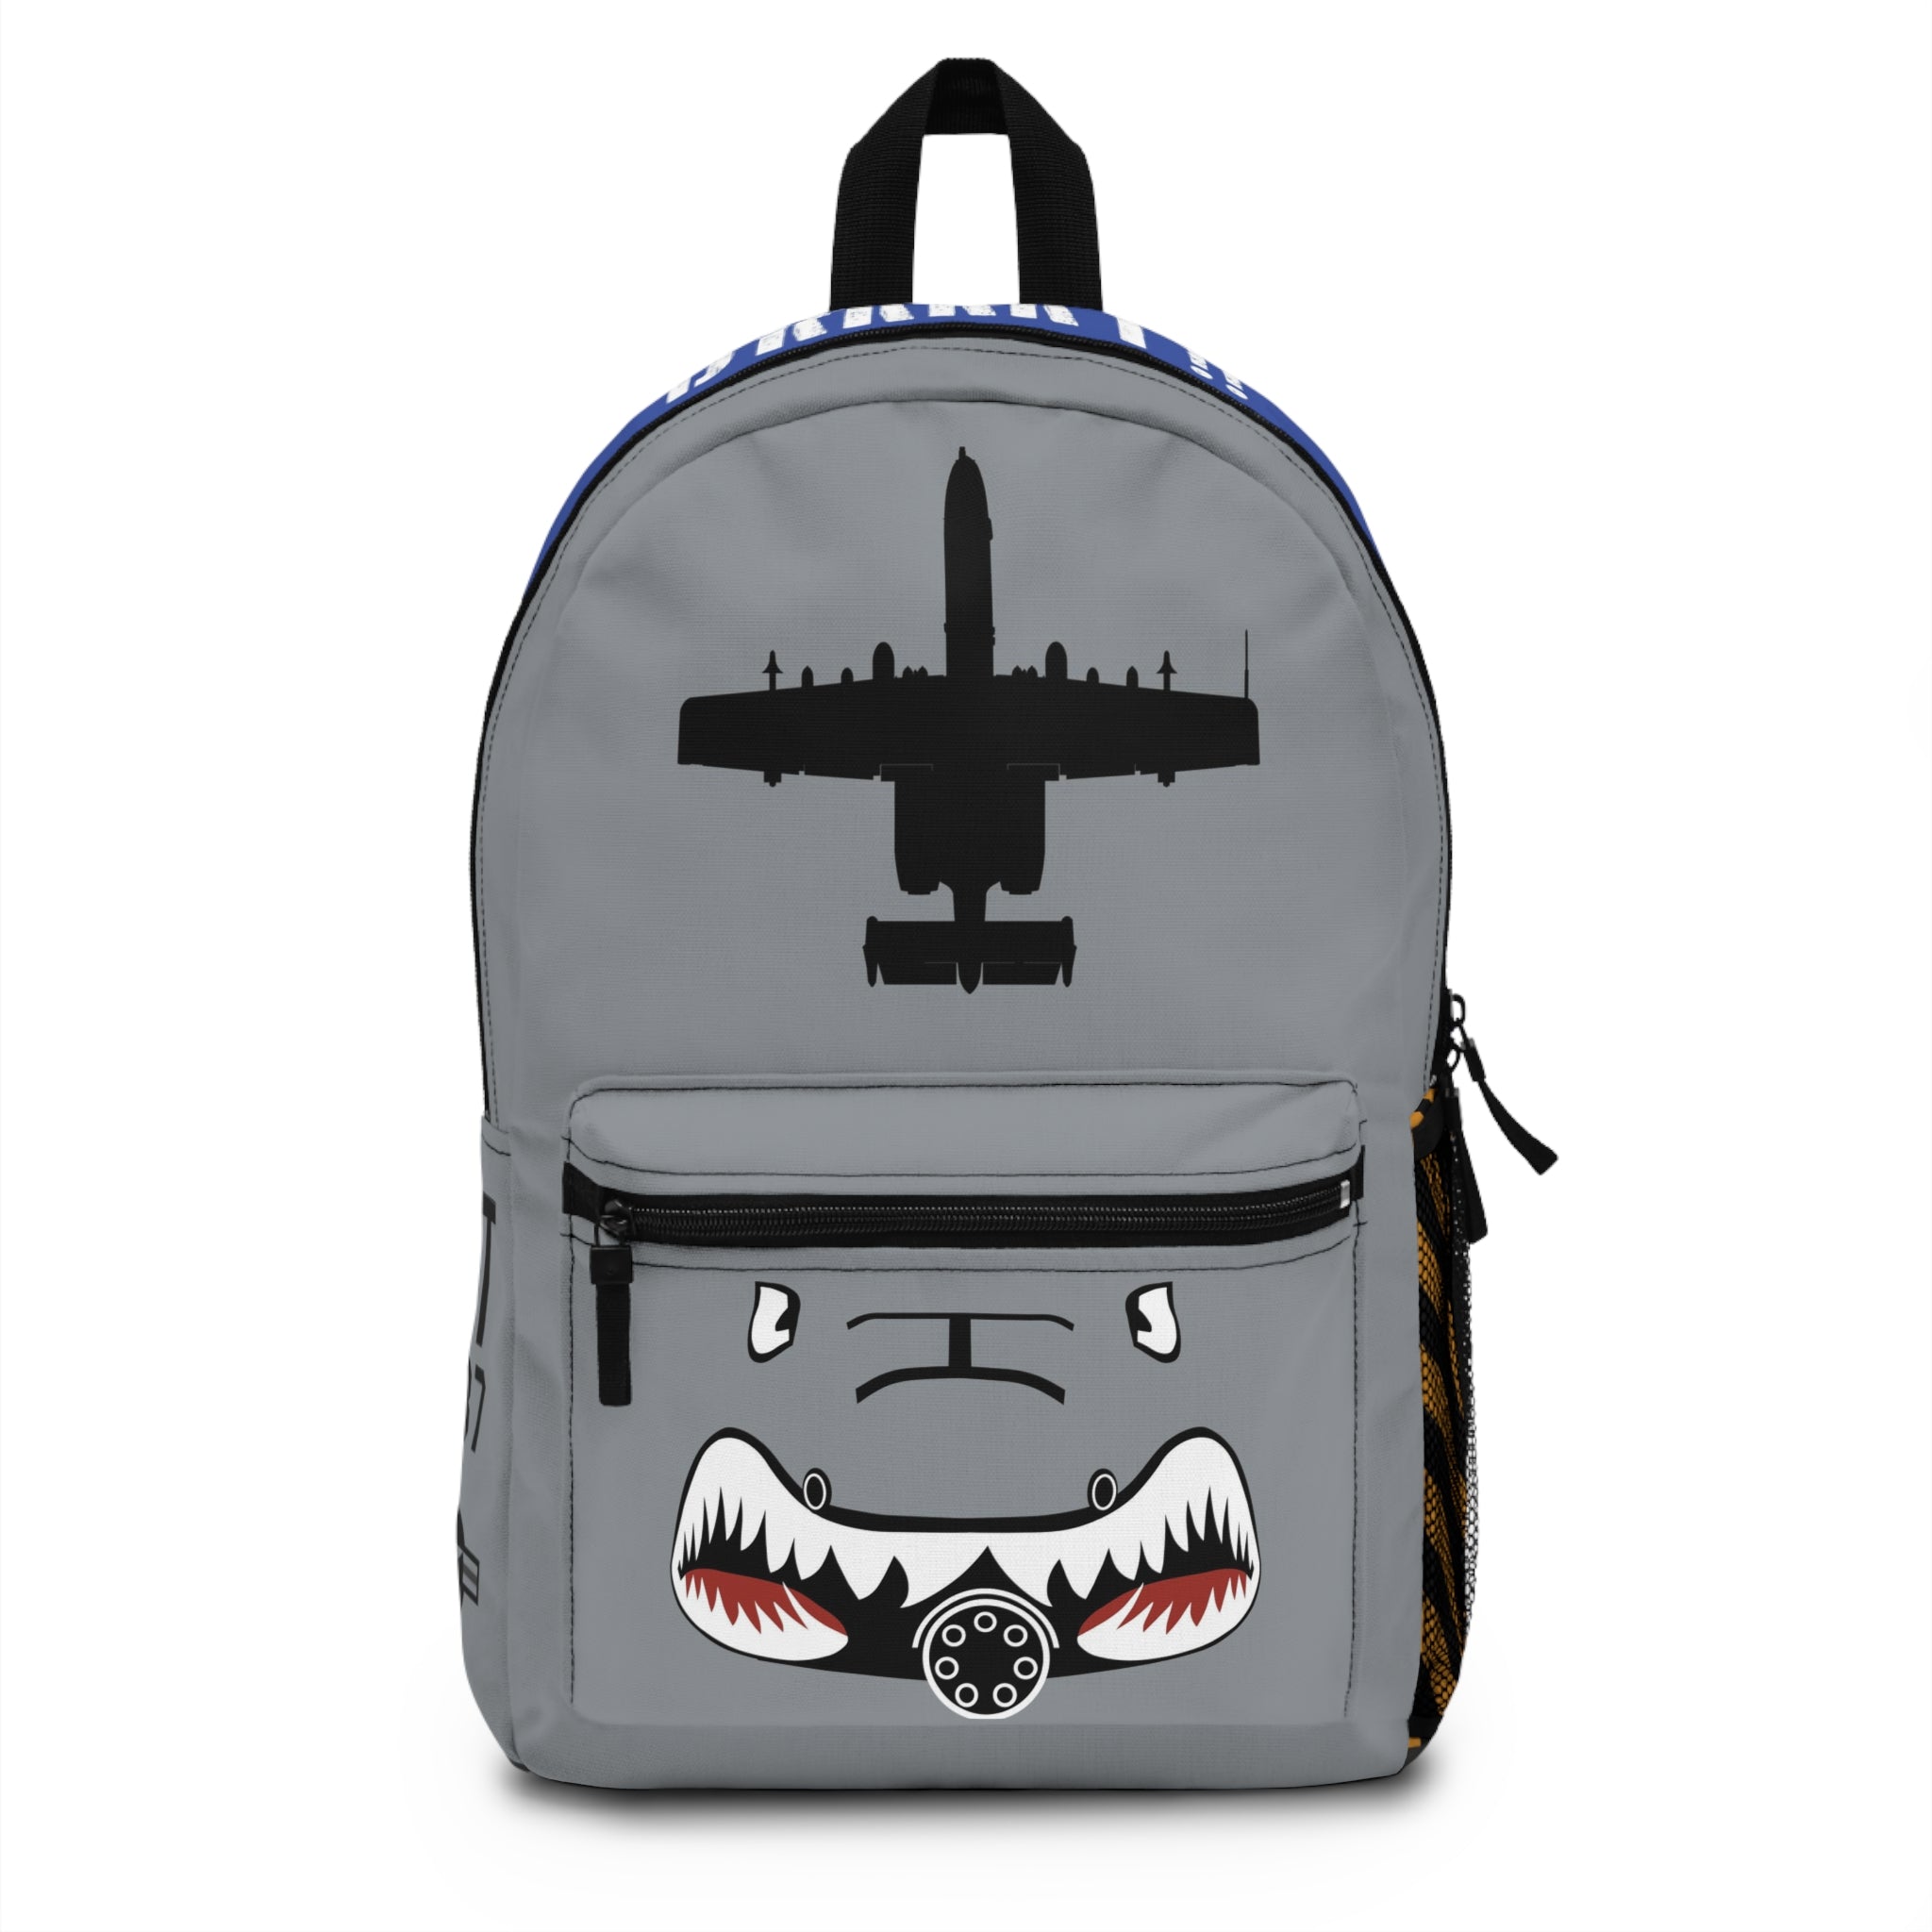 A-10 "Flying Tigers" Backpack - I Love a Hangar